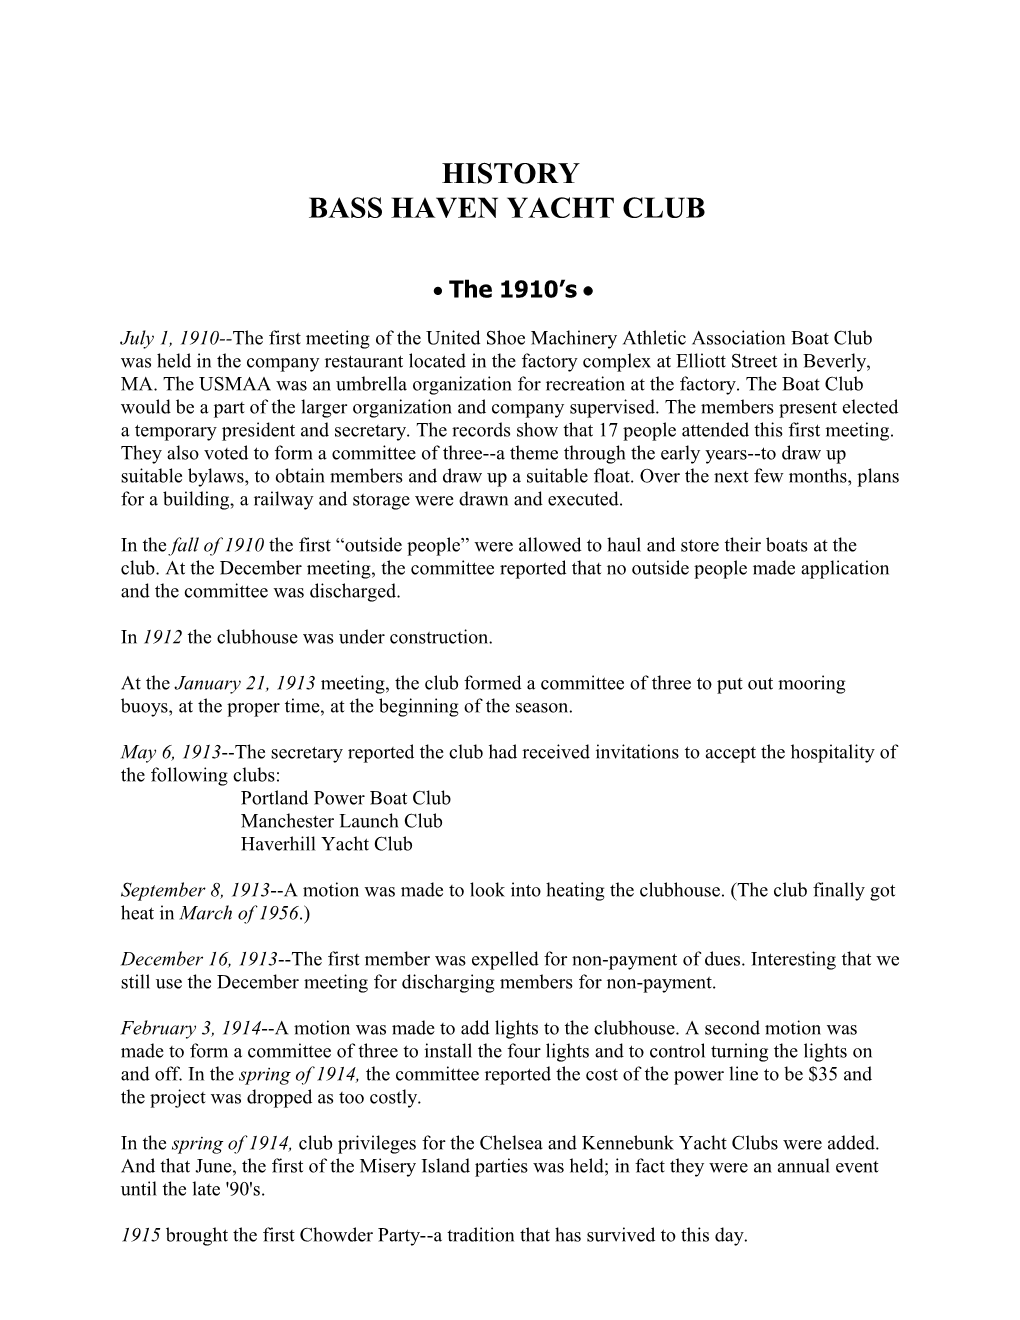 Bass Haven Yacht Club